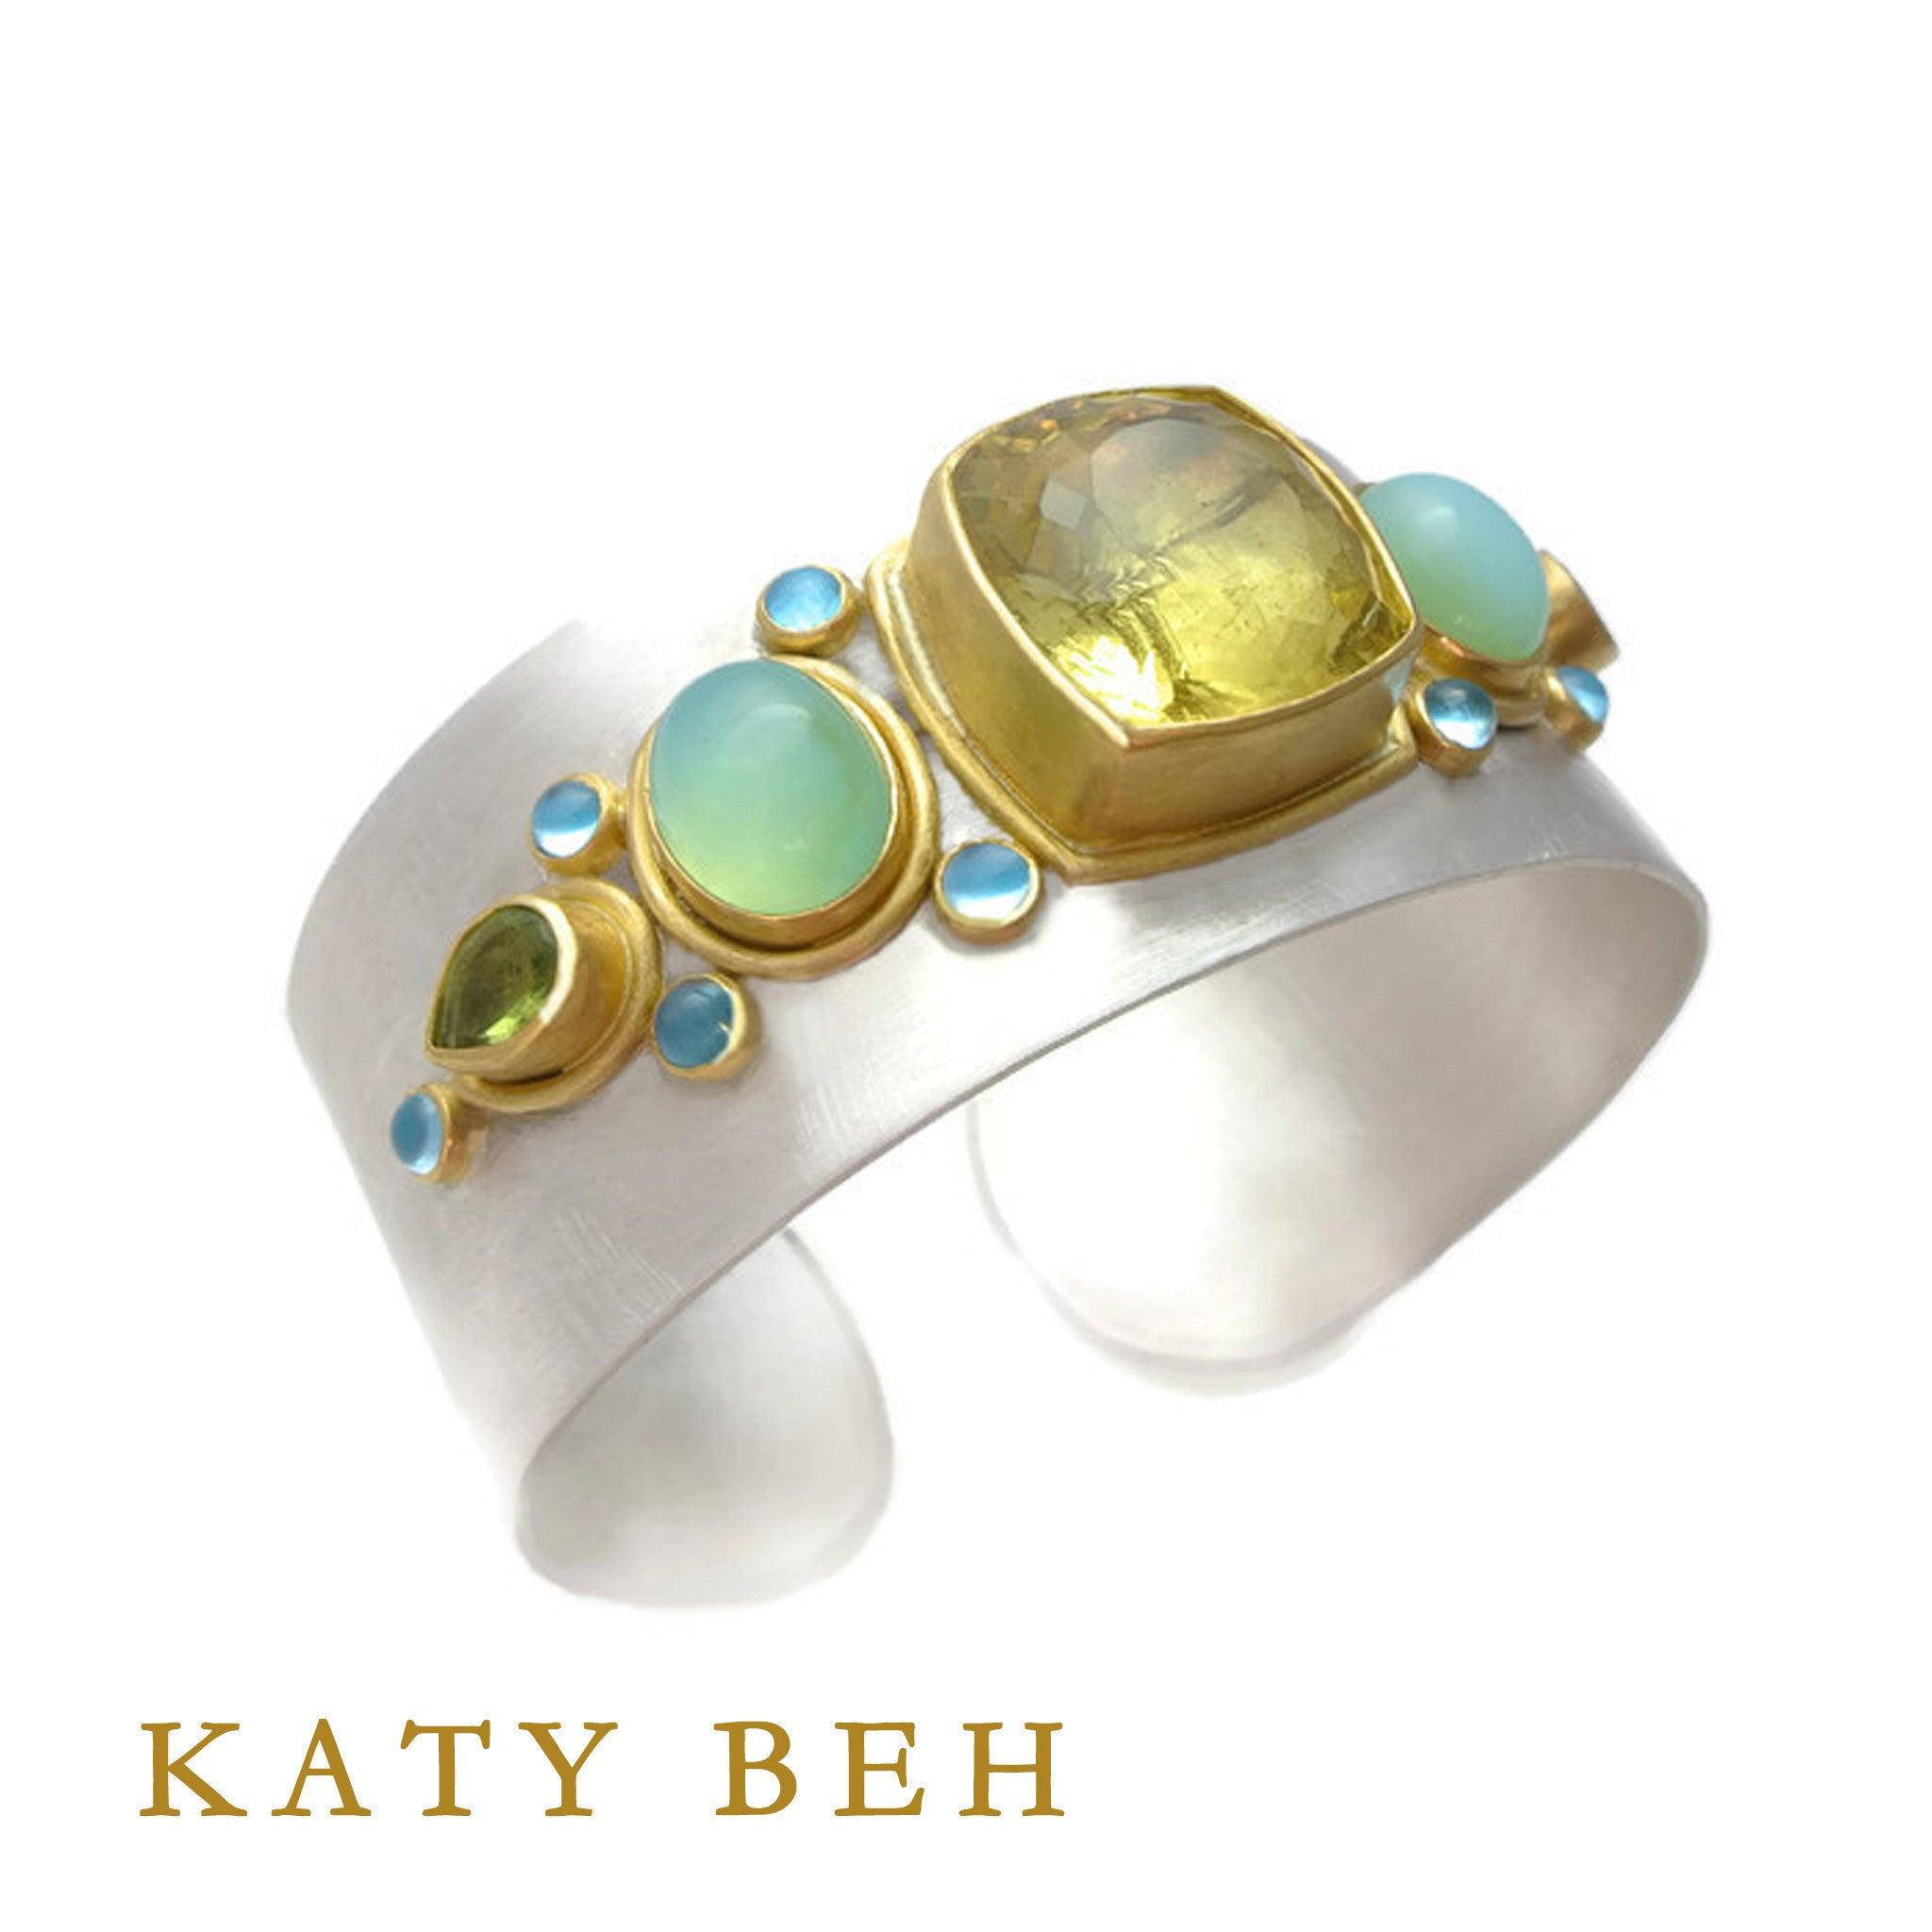 Bracelets - Katy Beh 22k Gold Handmade Jewelry New Orleans